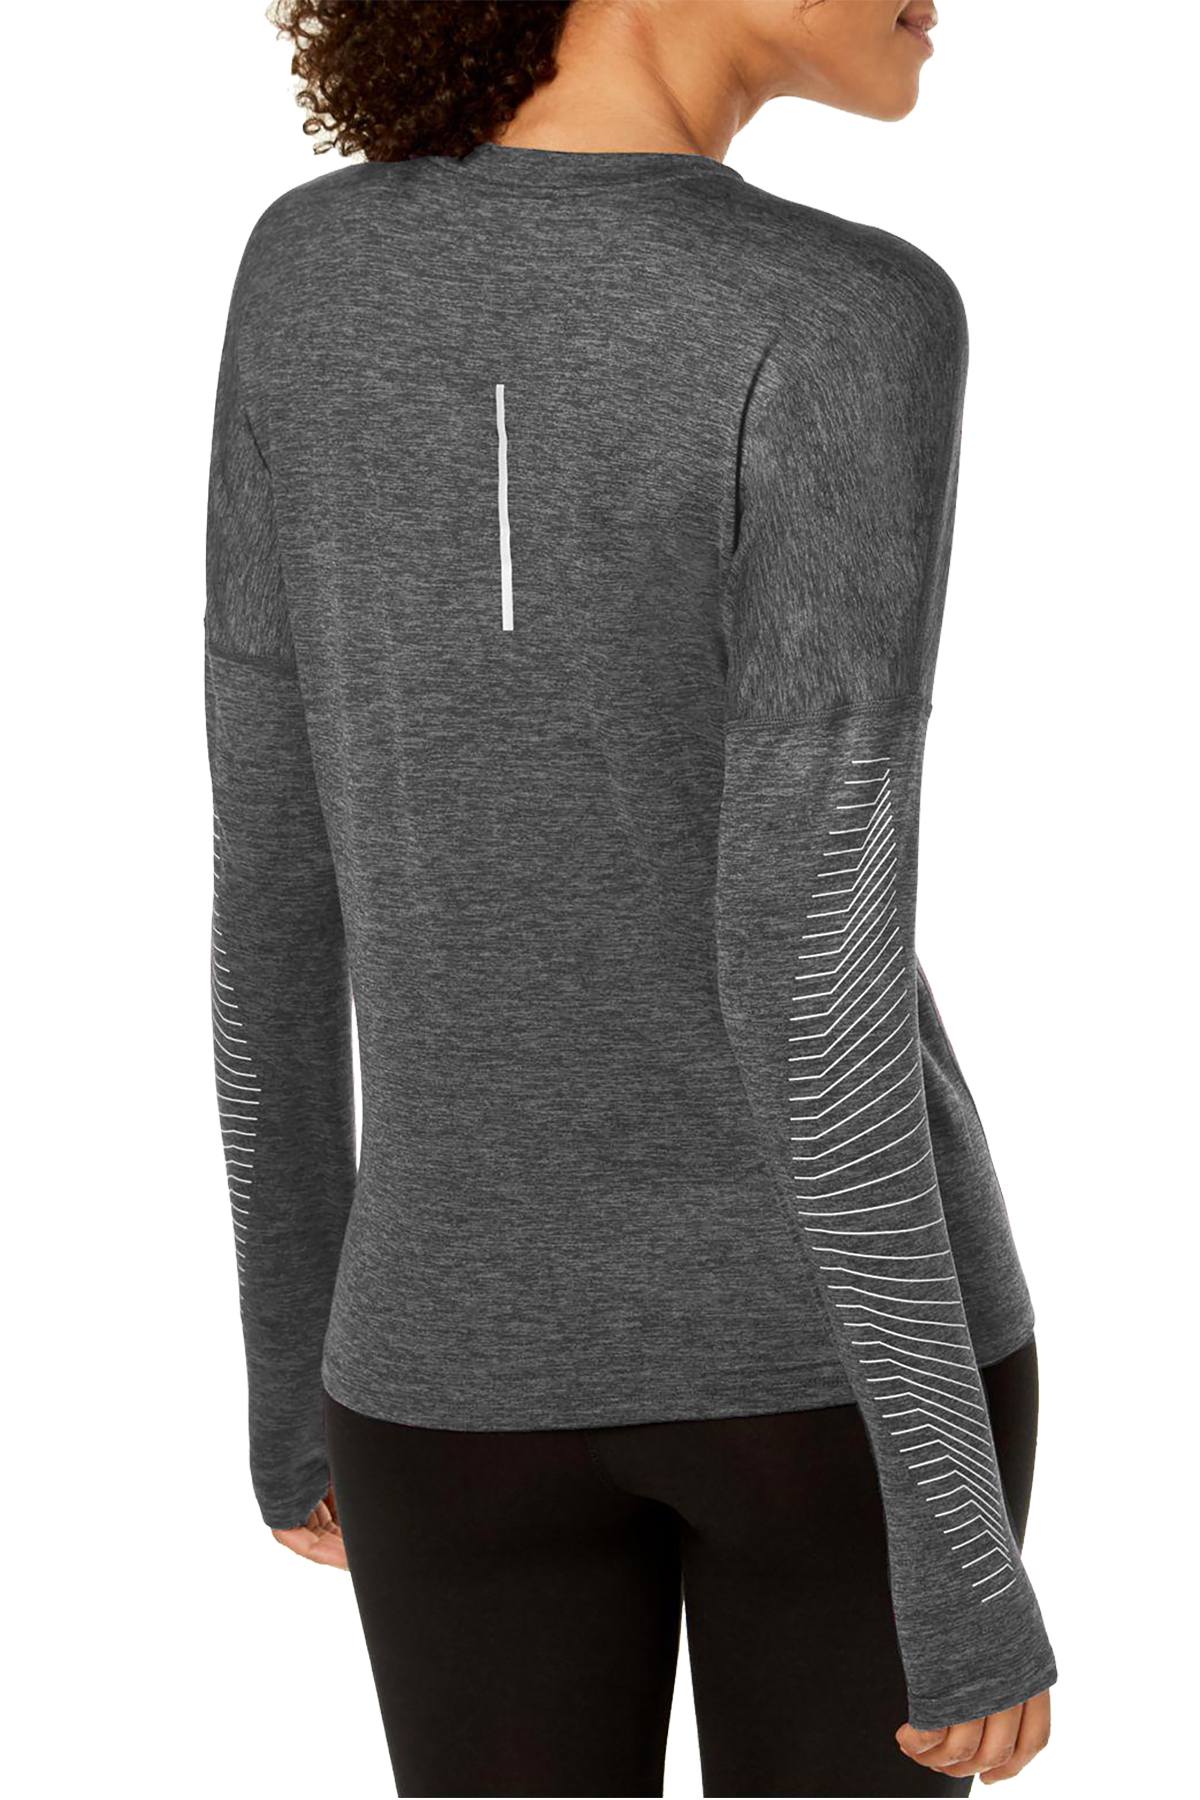 Nike Dark Grey-Heather Dry Element Top